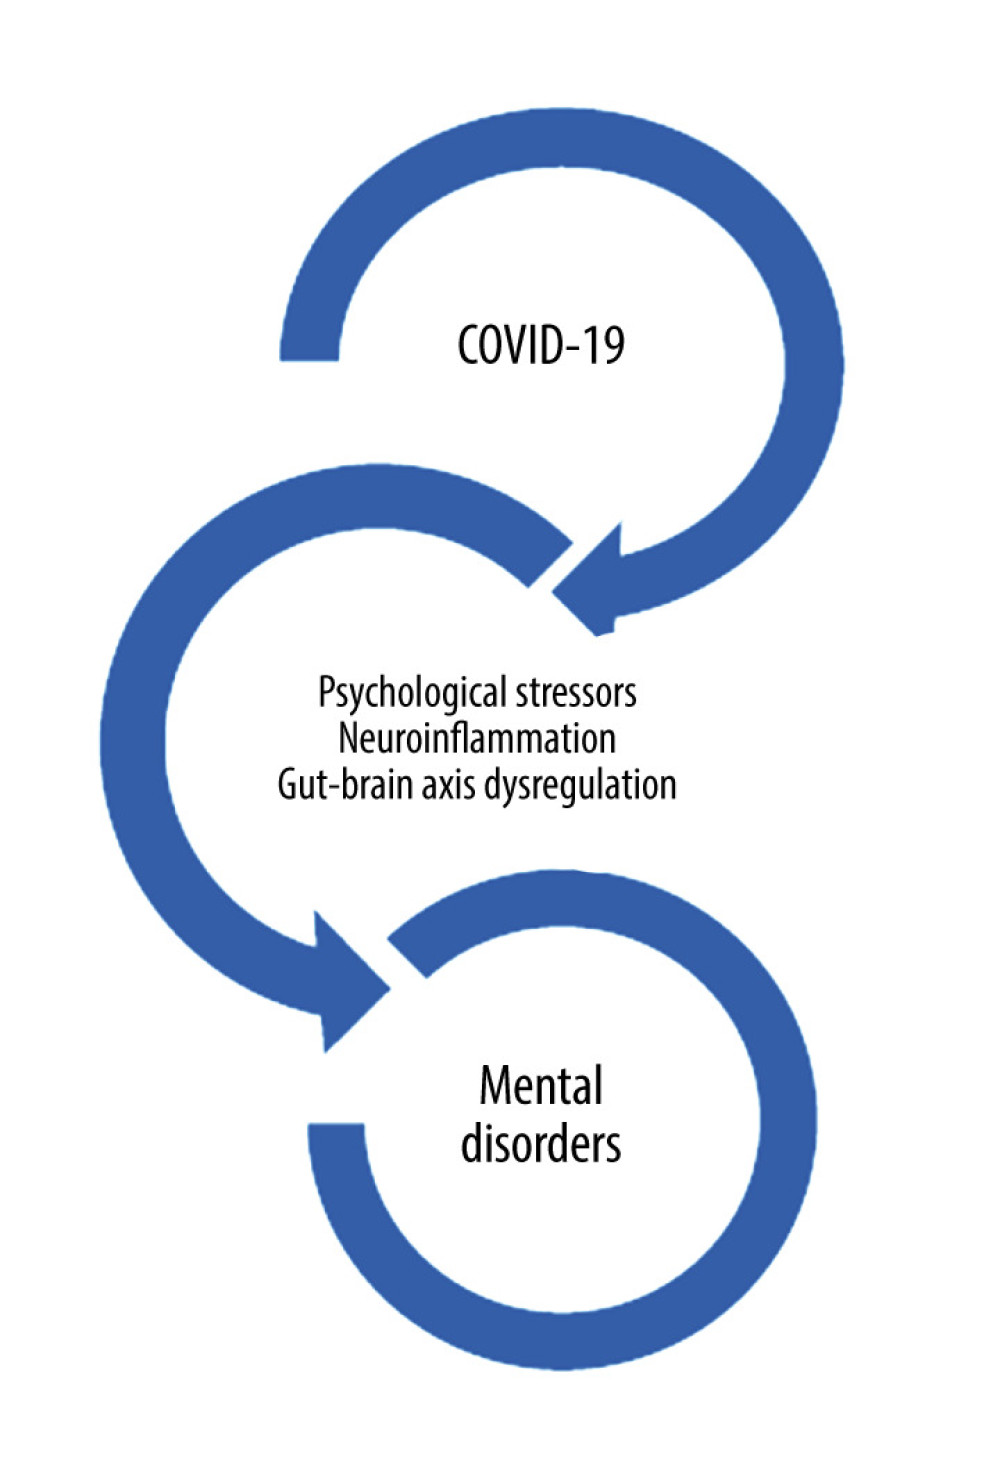 Scheme of possible linking mechanisms between mental disorders and Coronavirus disease 2019 (COVID-19).